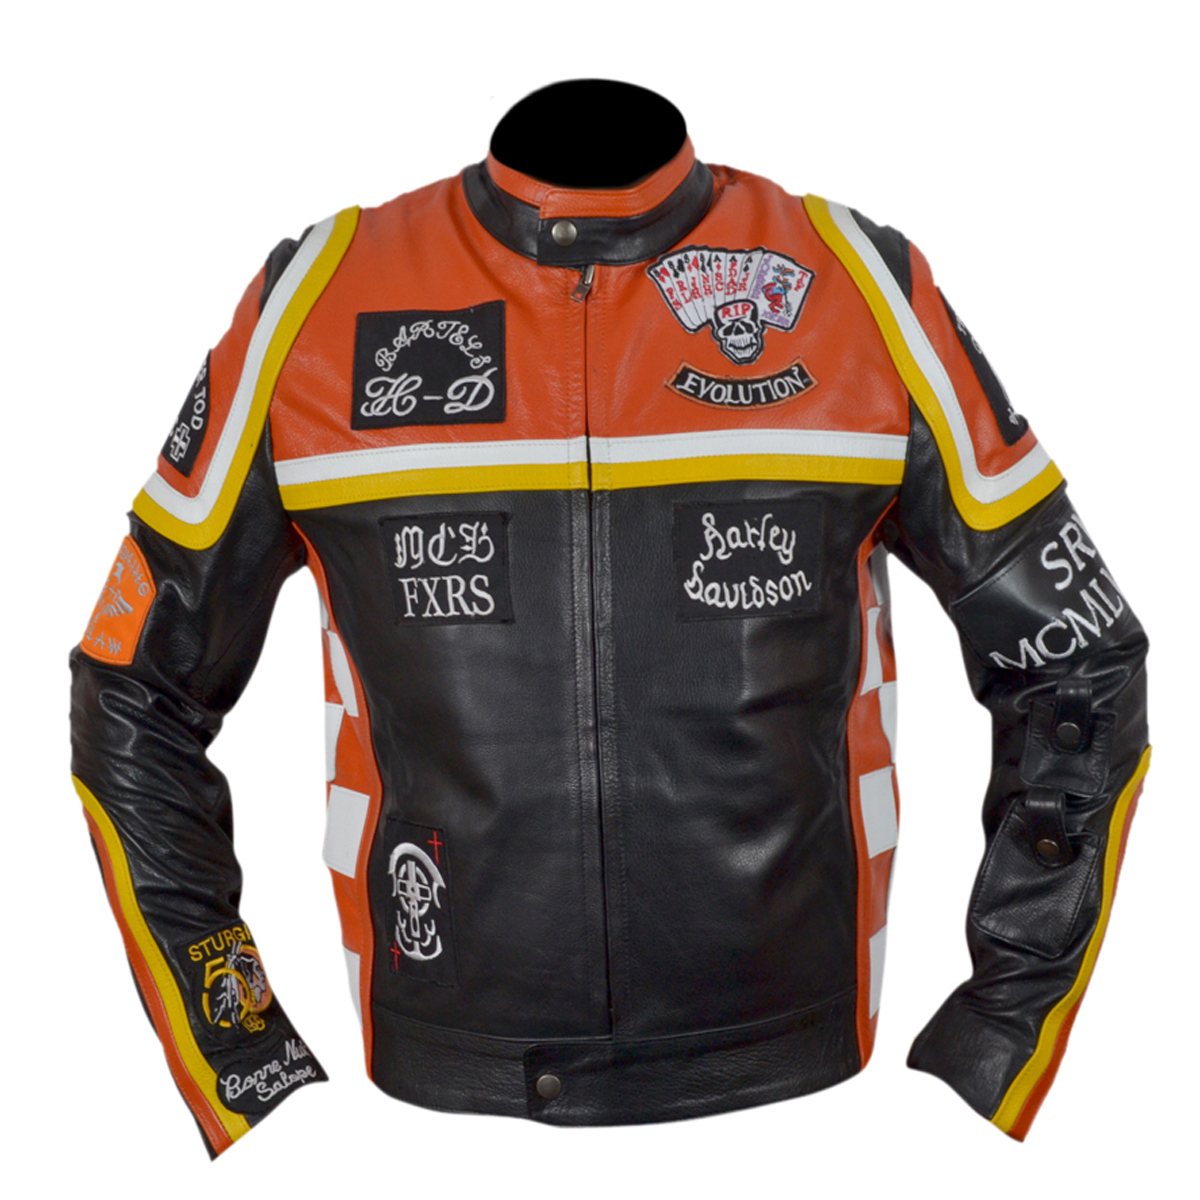 Harley Davidson And The Marlboro Man Mickey Rourke Genuine Leather Jacket Price In Pakistan